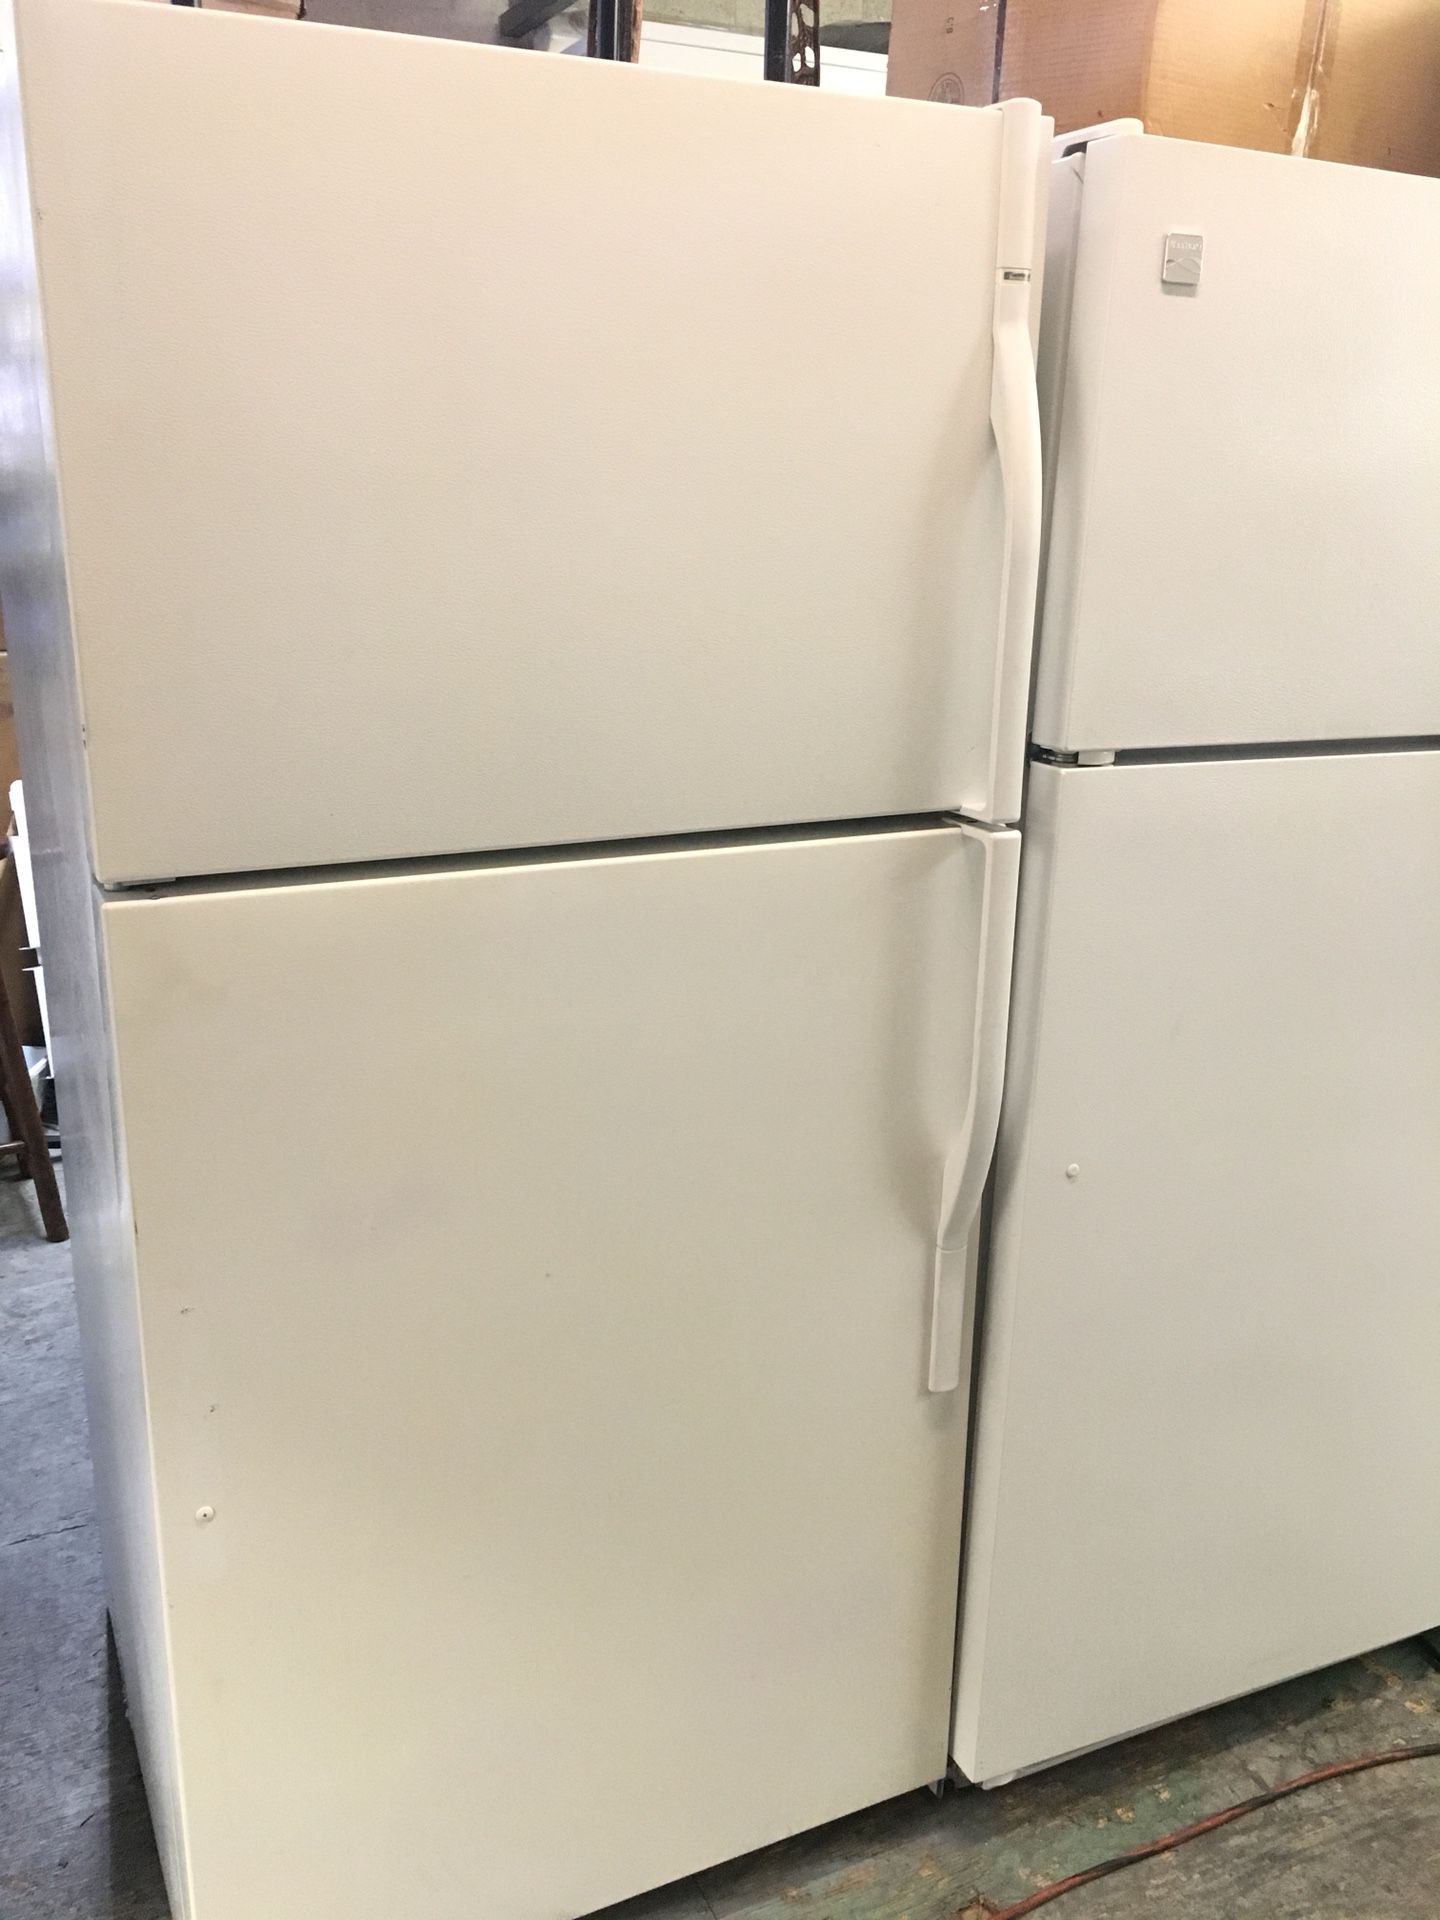 Top freezer Refrigerator. Ice Maker